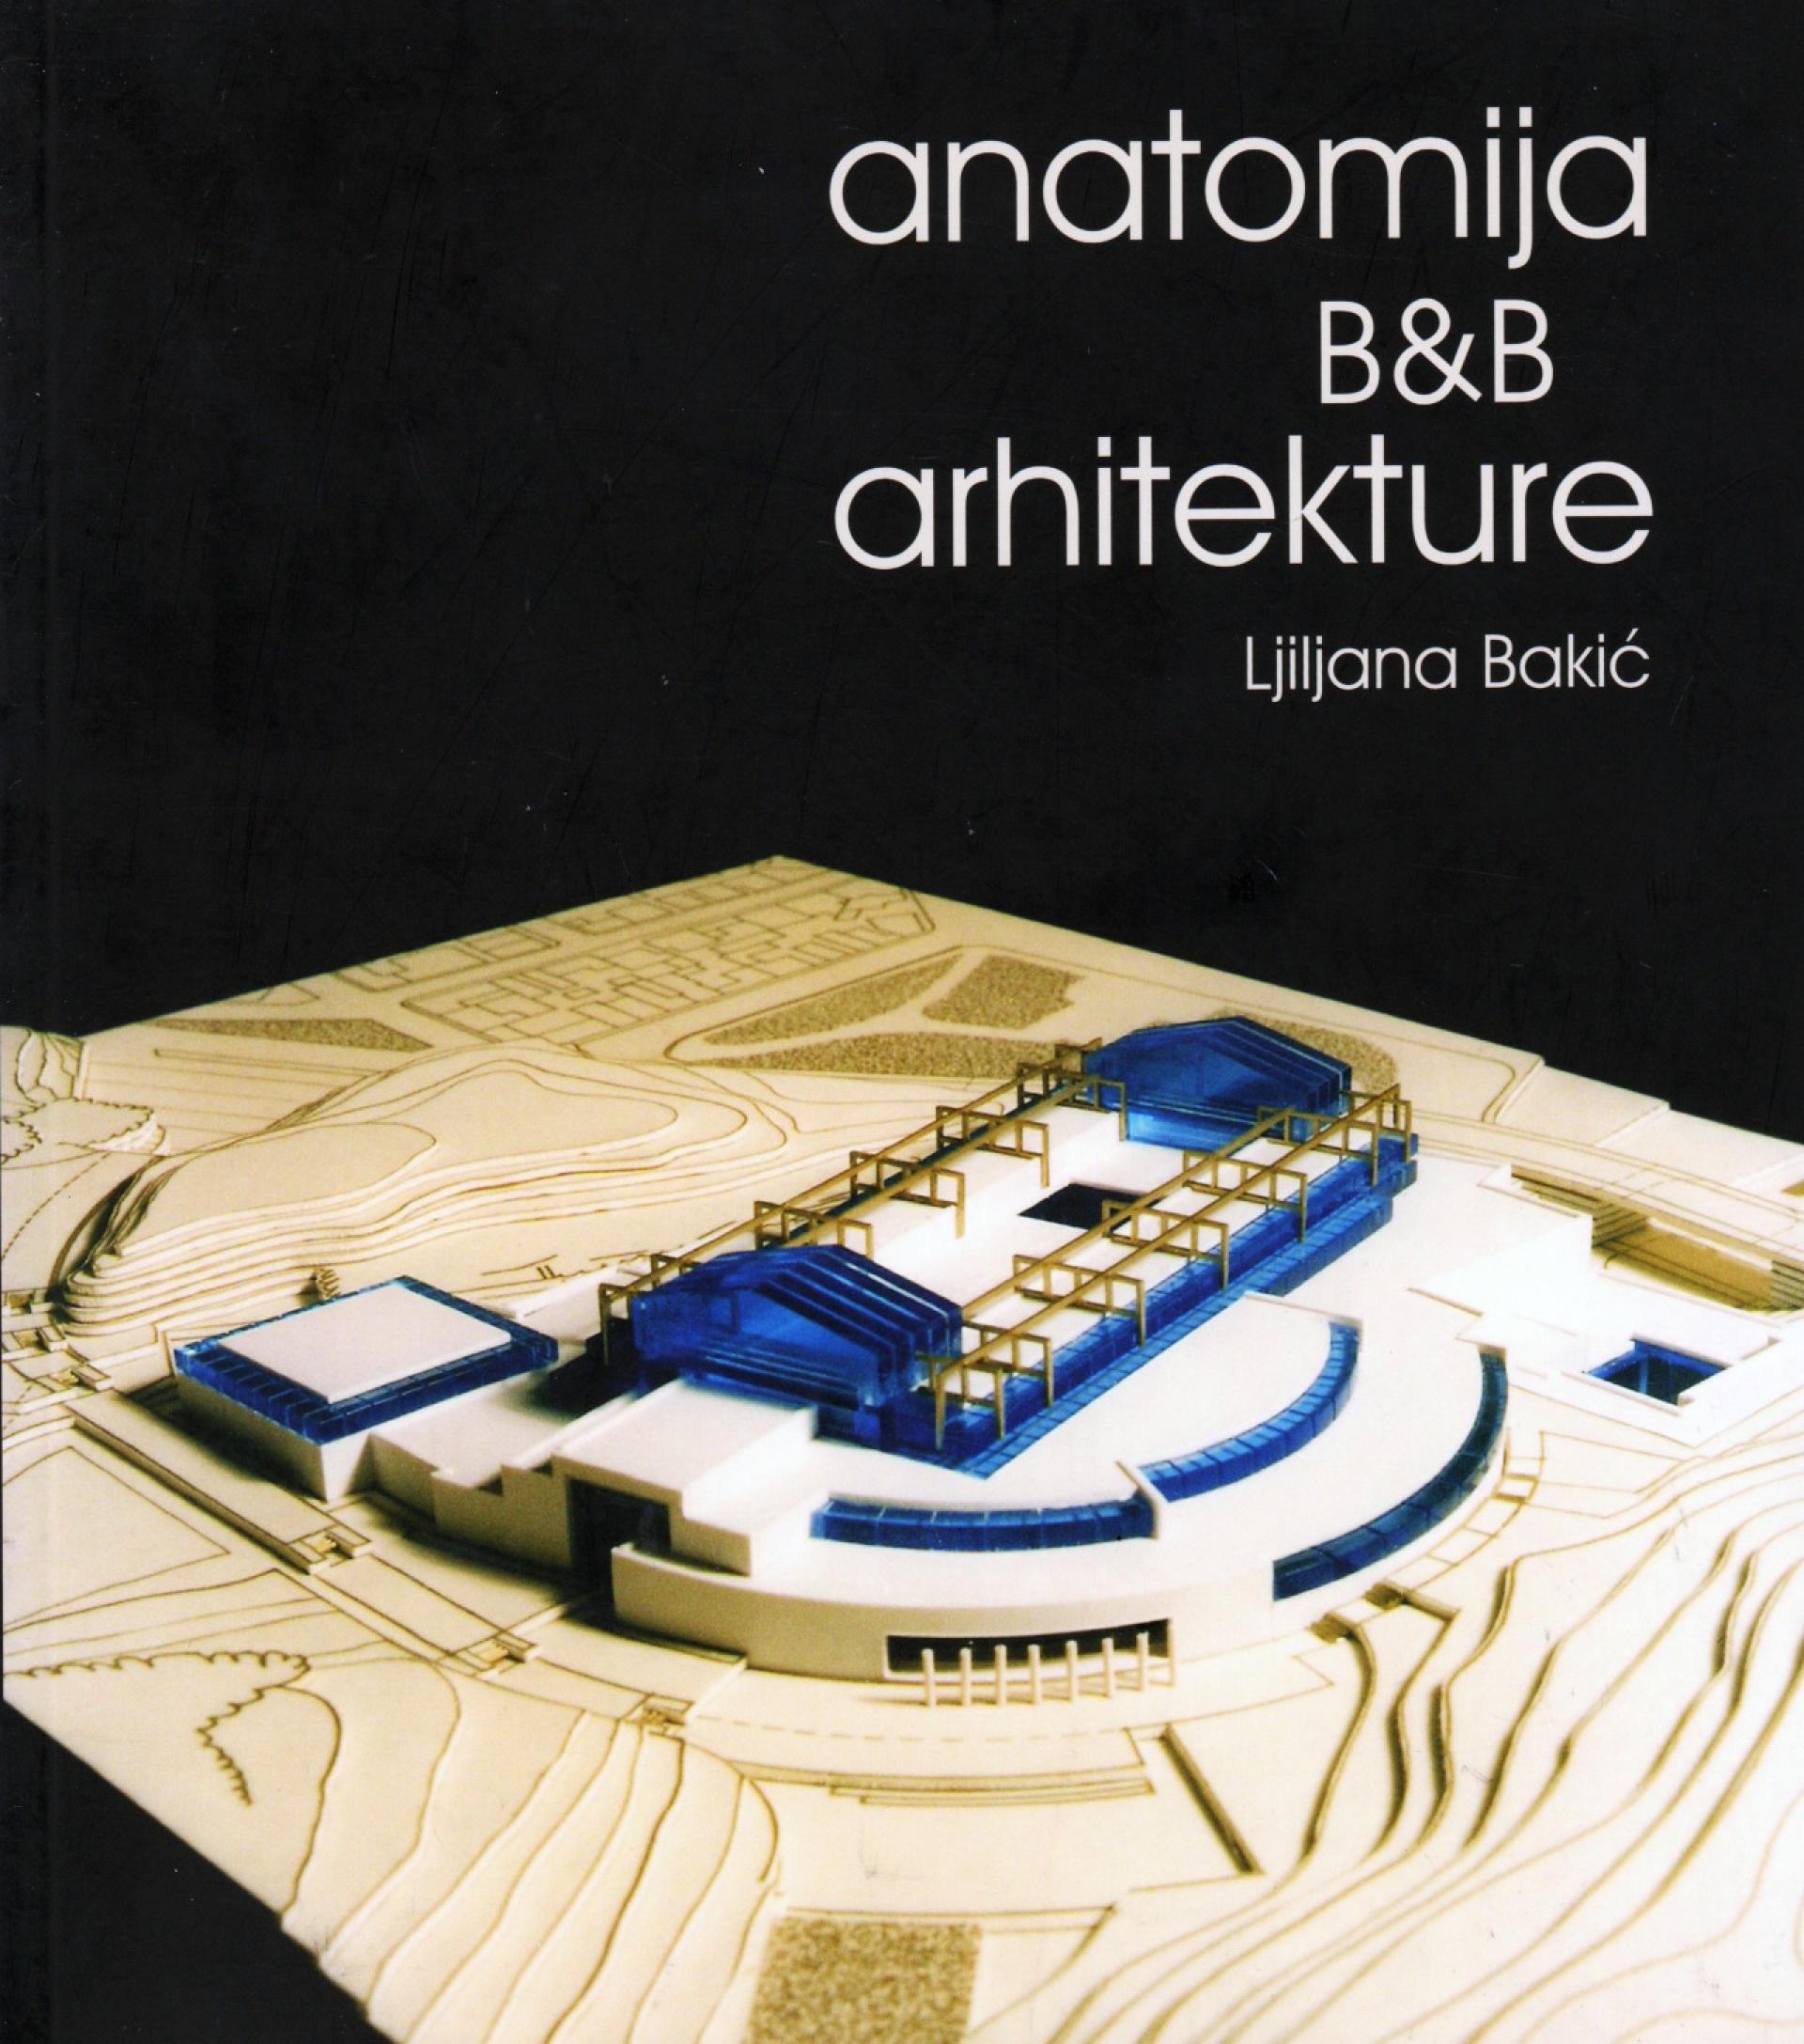 Ljiljana’s book “Anatomy of B & B Architecture” was awarded Ranko Radović Award (2012) in Serbia for the critical theoretical texts on architecture.